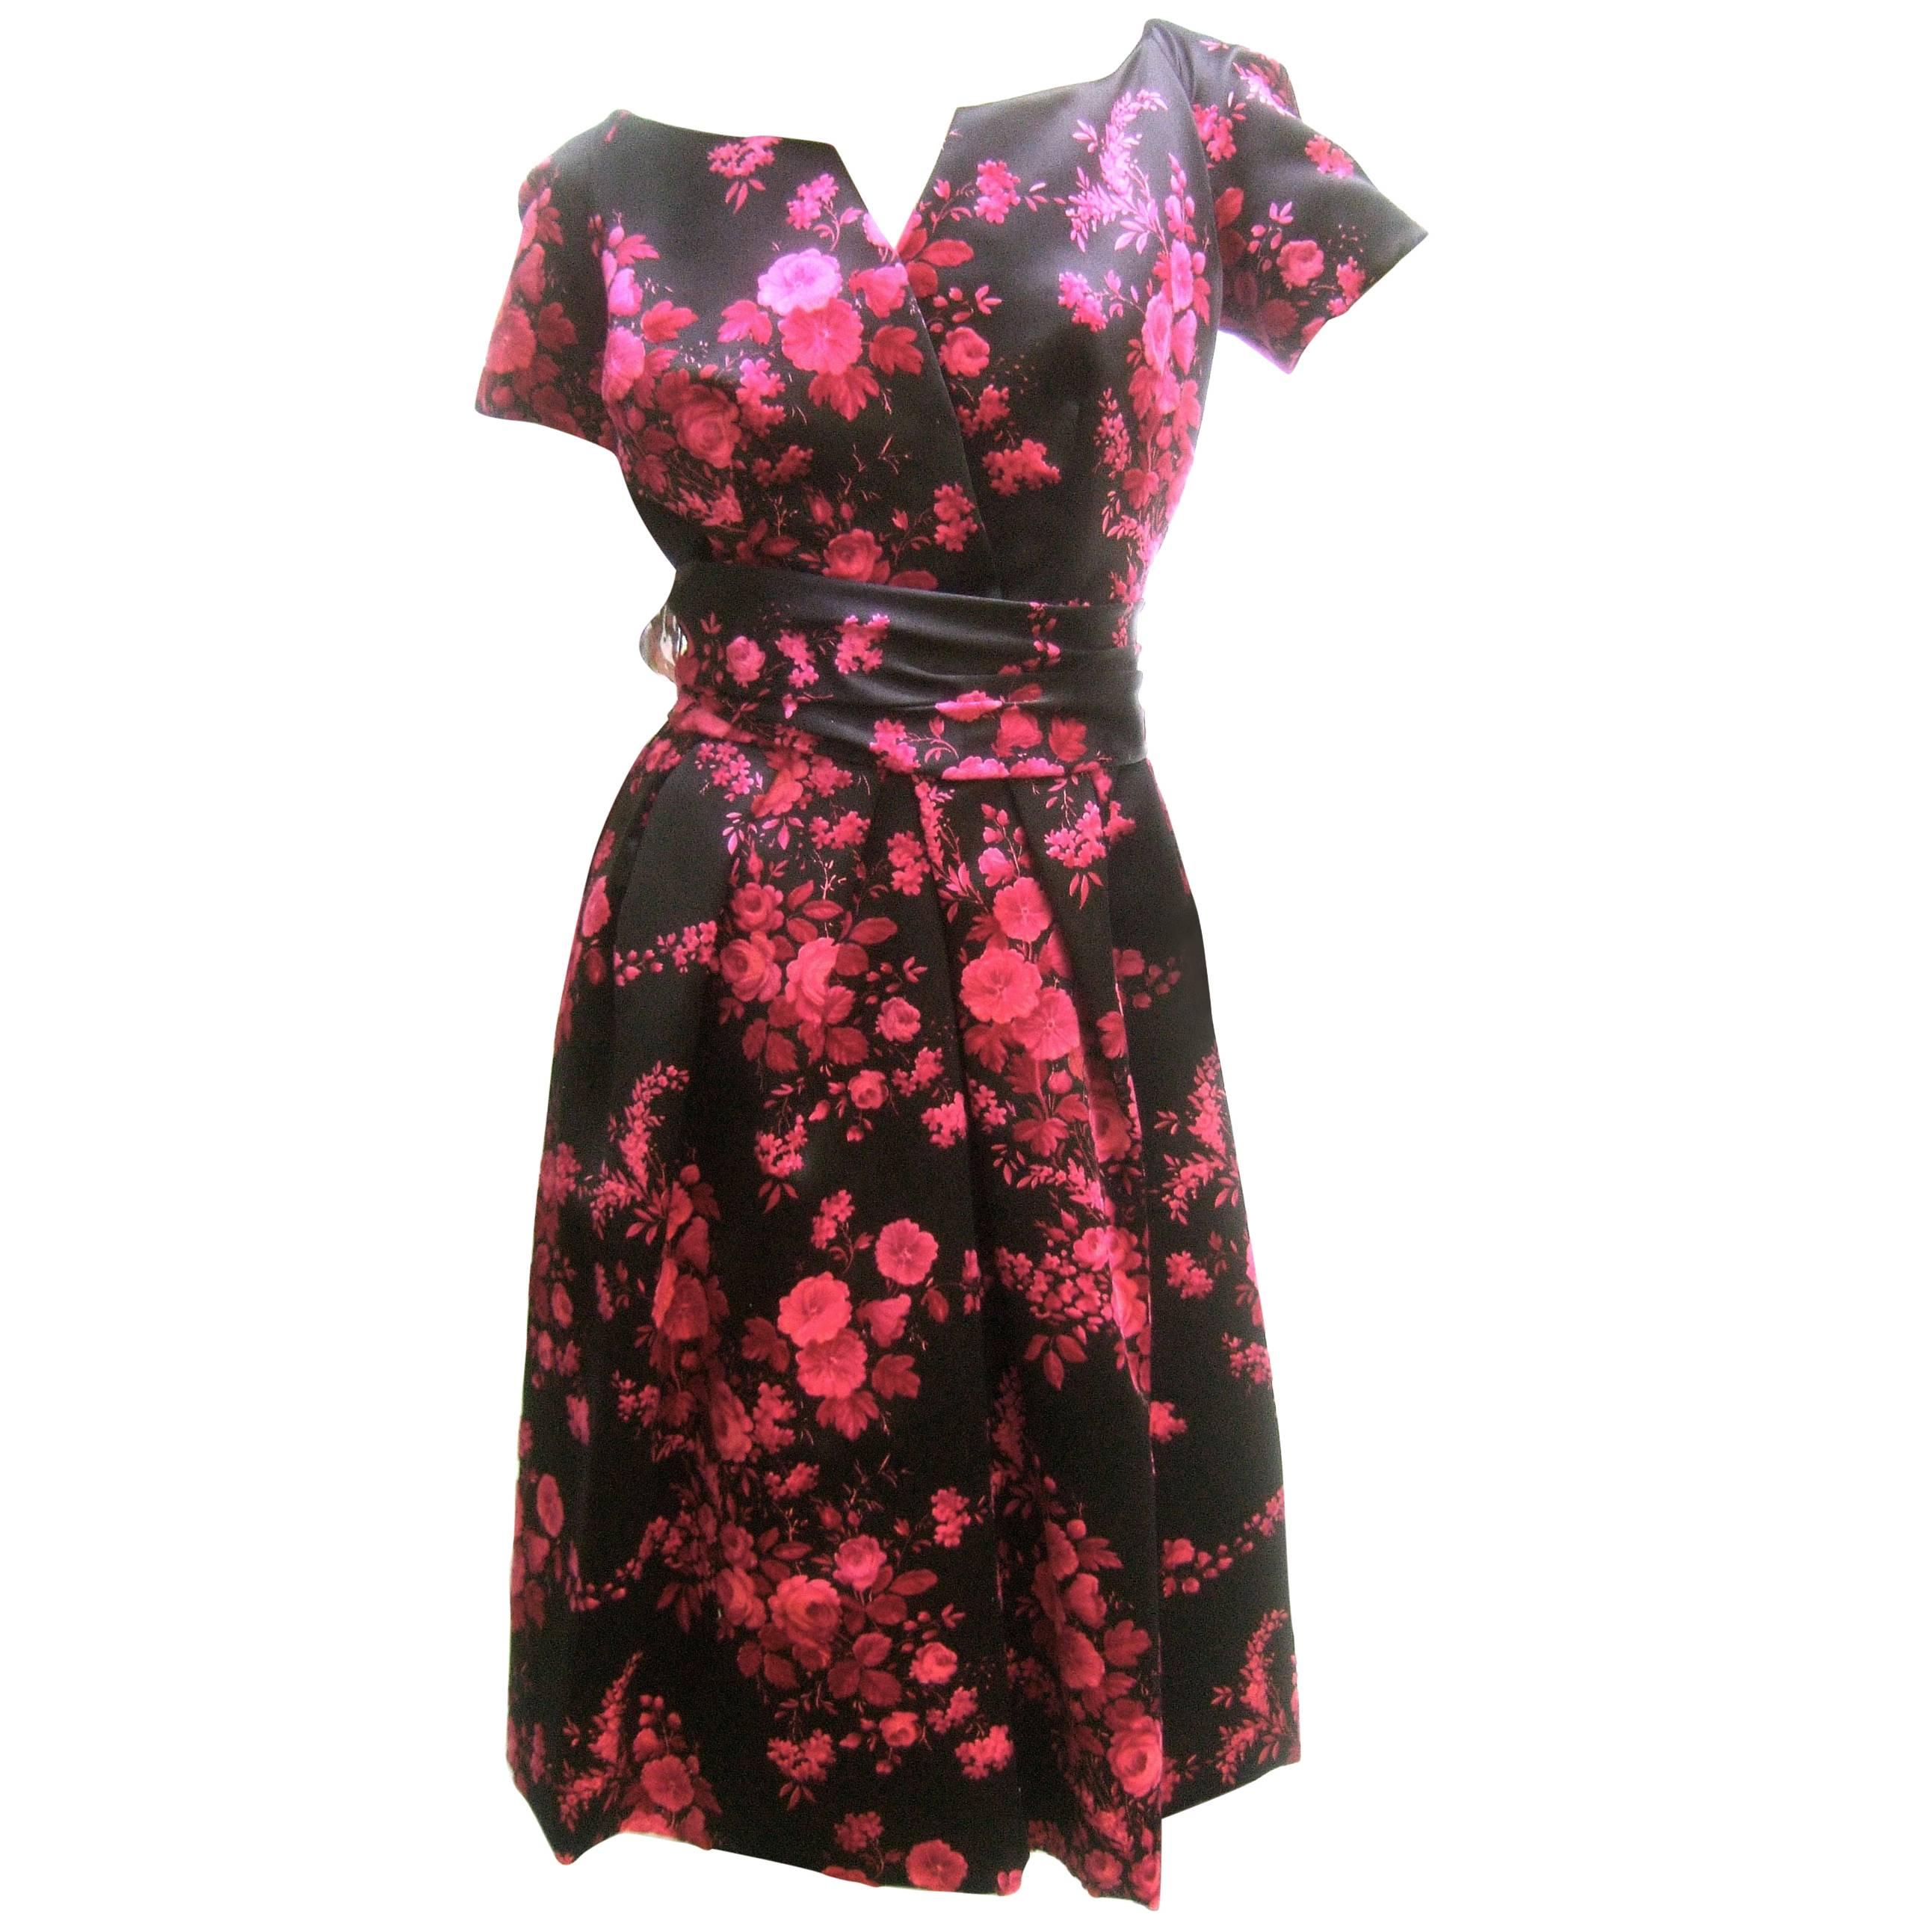 Christian Dior Couture Satin Floral Print Dress circa 1960